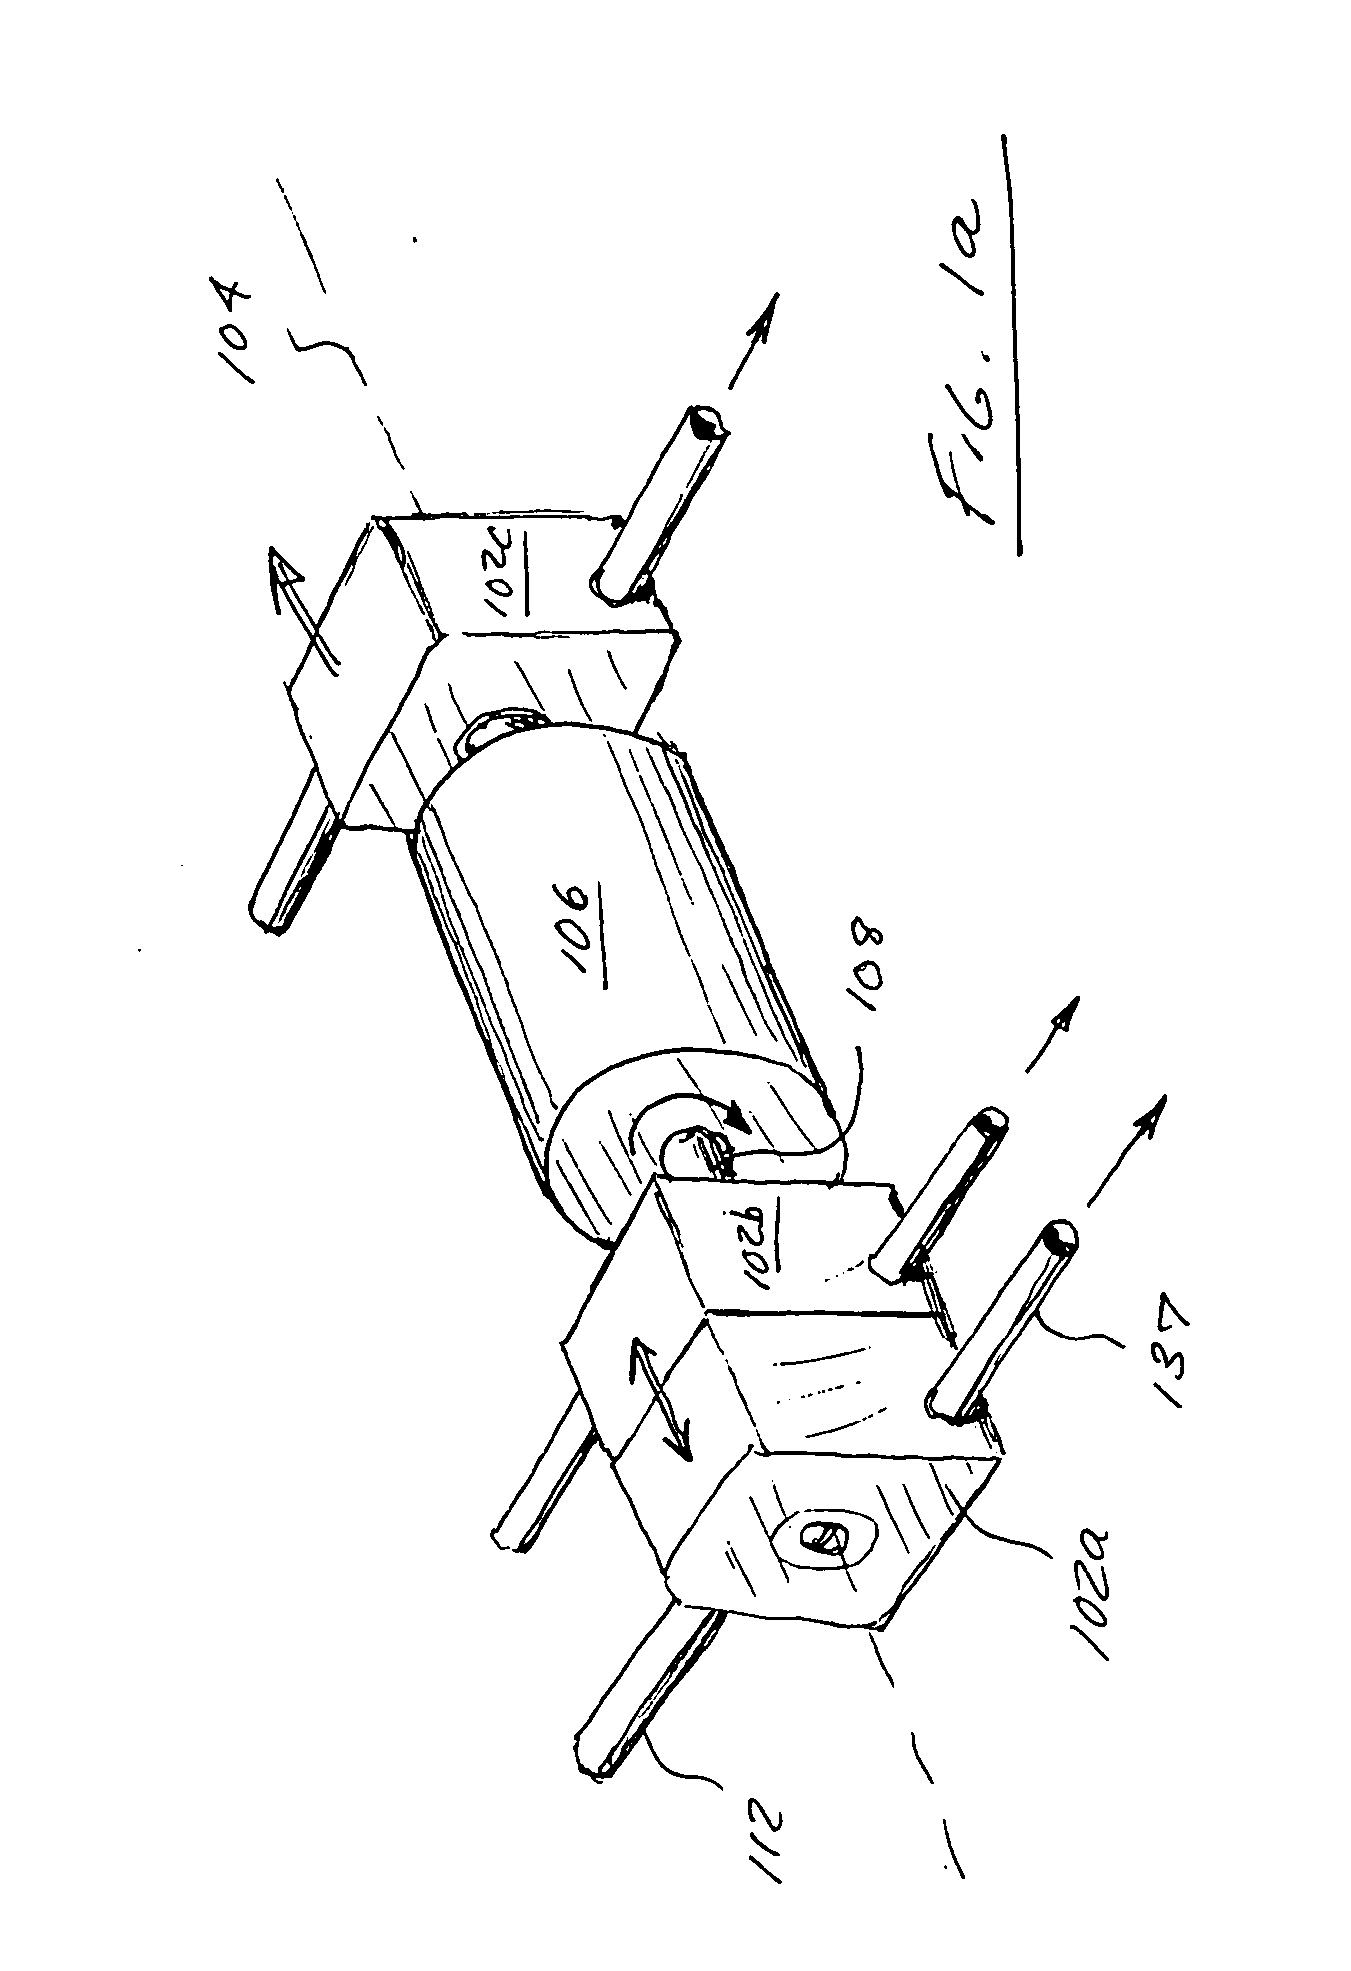 Apparatus and methods for dispensing fluidic or viscous materials